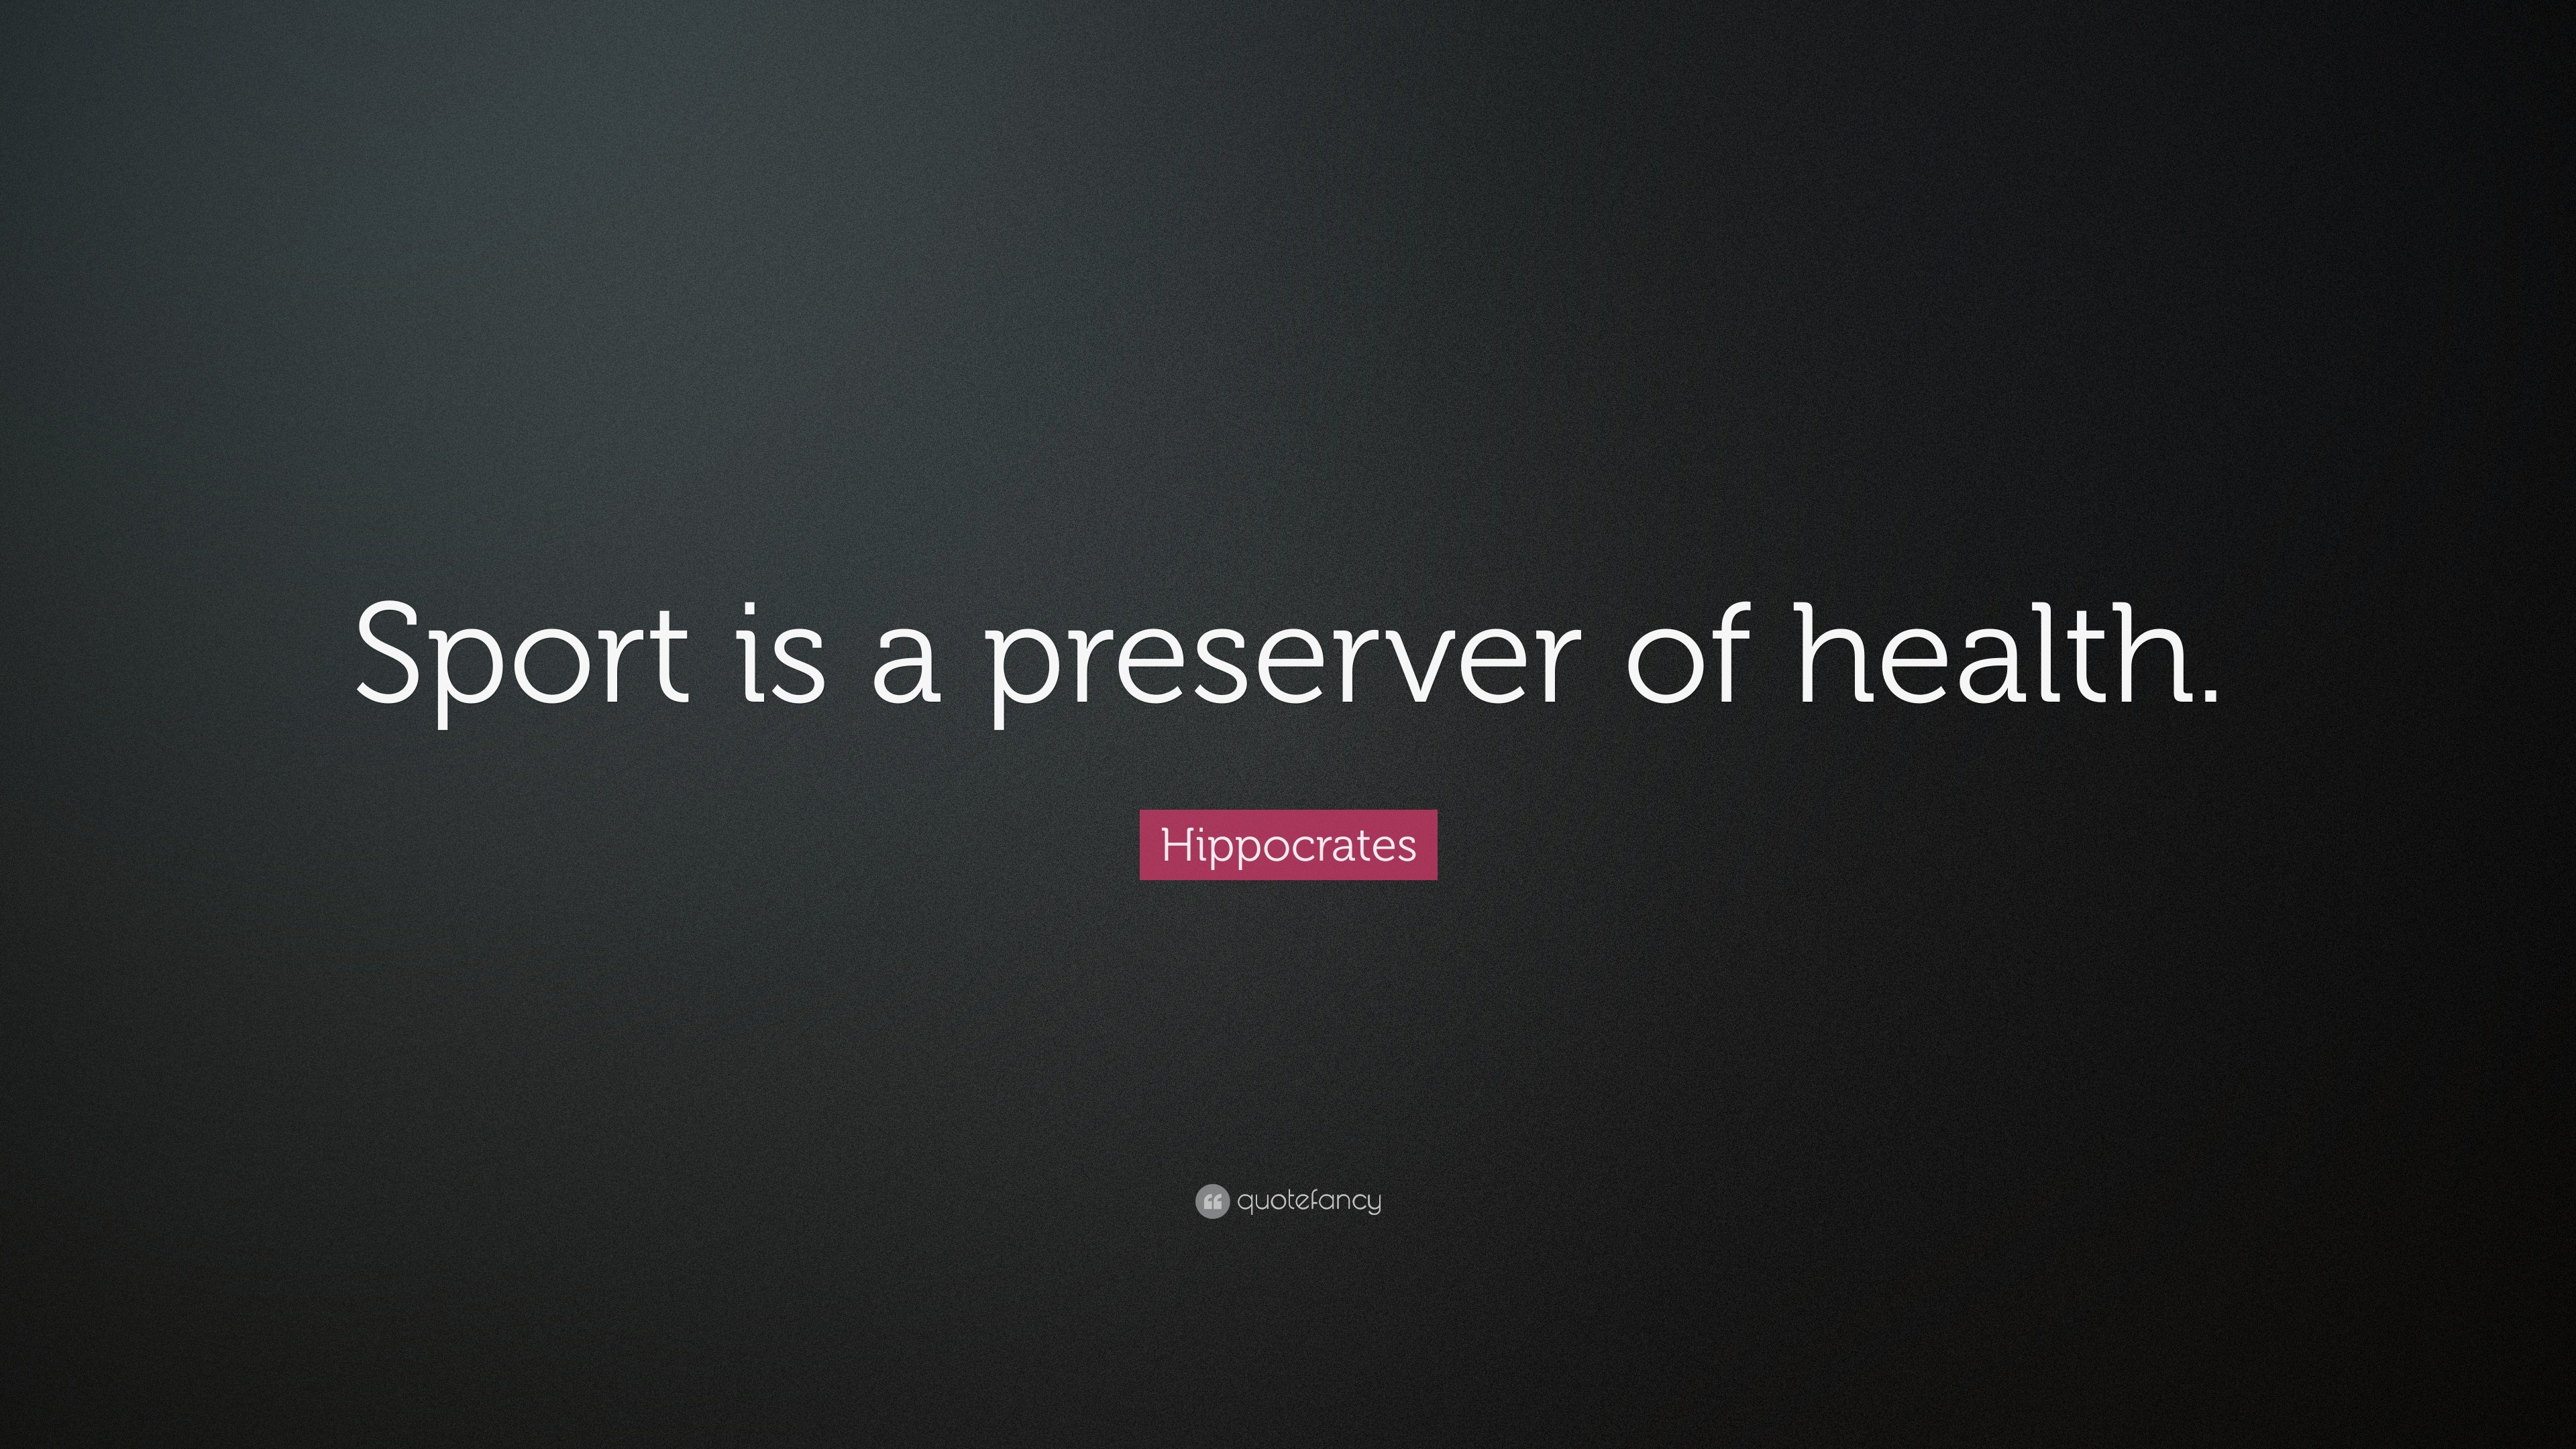 Hippocrates Quote: 